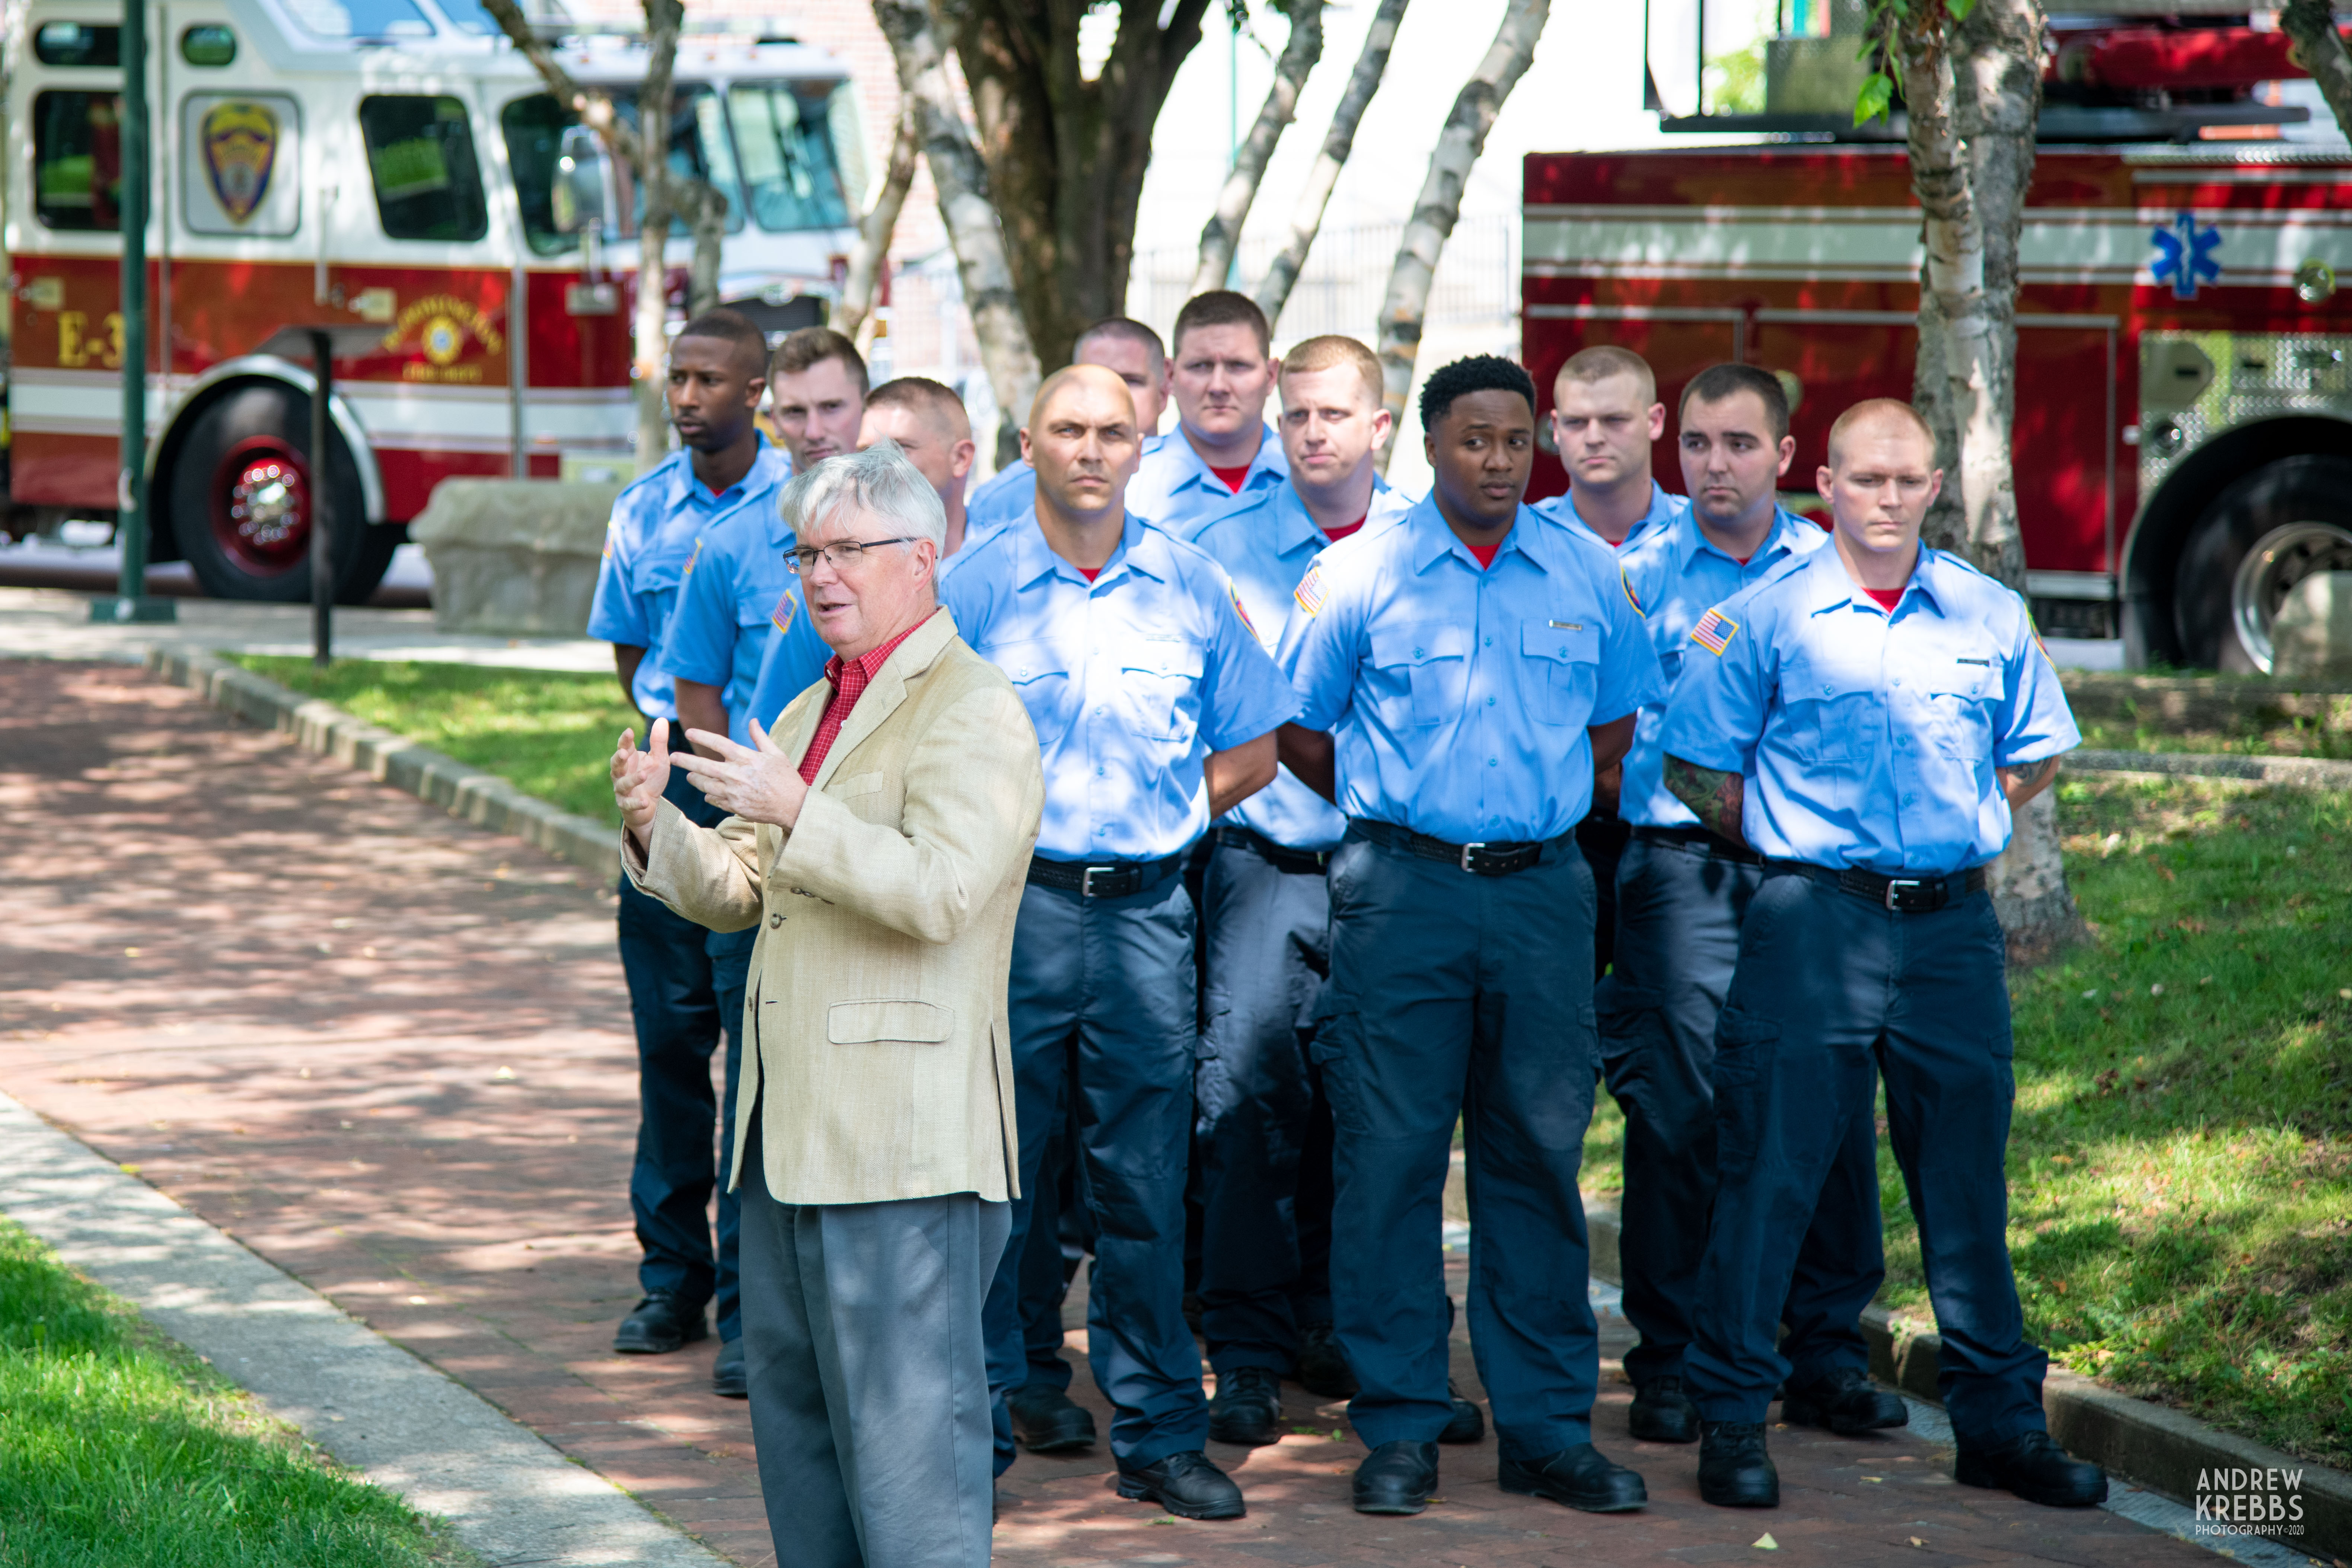 Mayor Hamilton congratulates new fire fighters